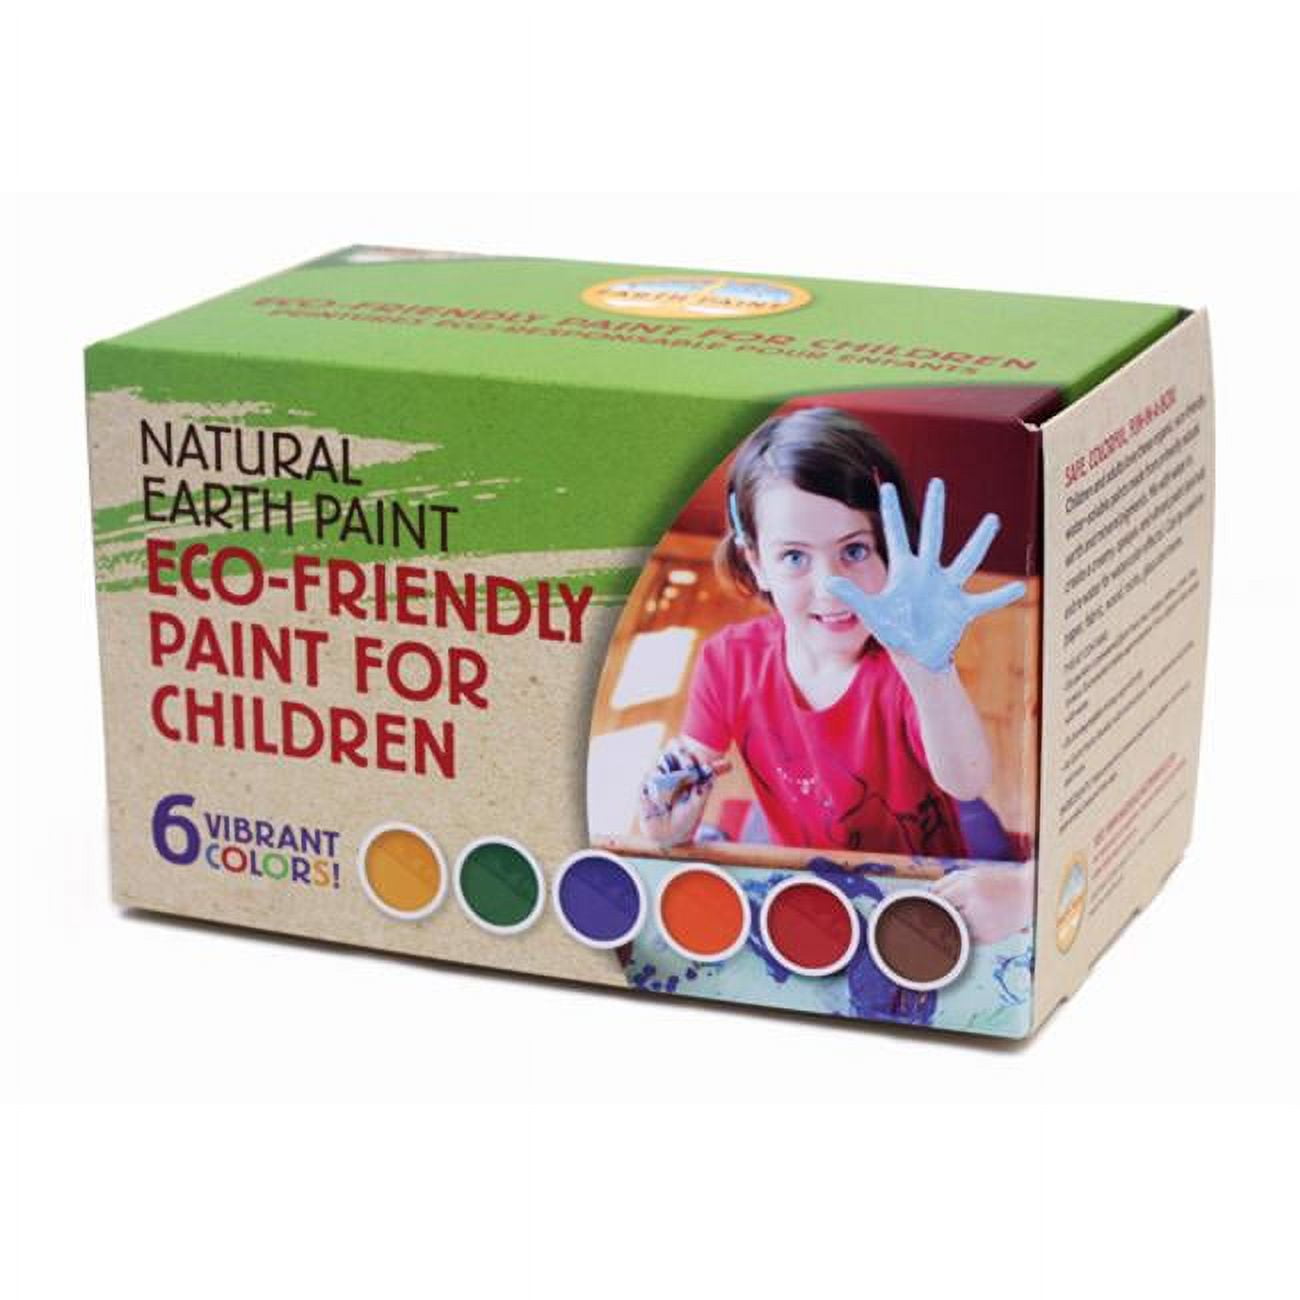 Natural Acrylik Paint Set™ - Natural Earth Paint